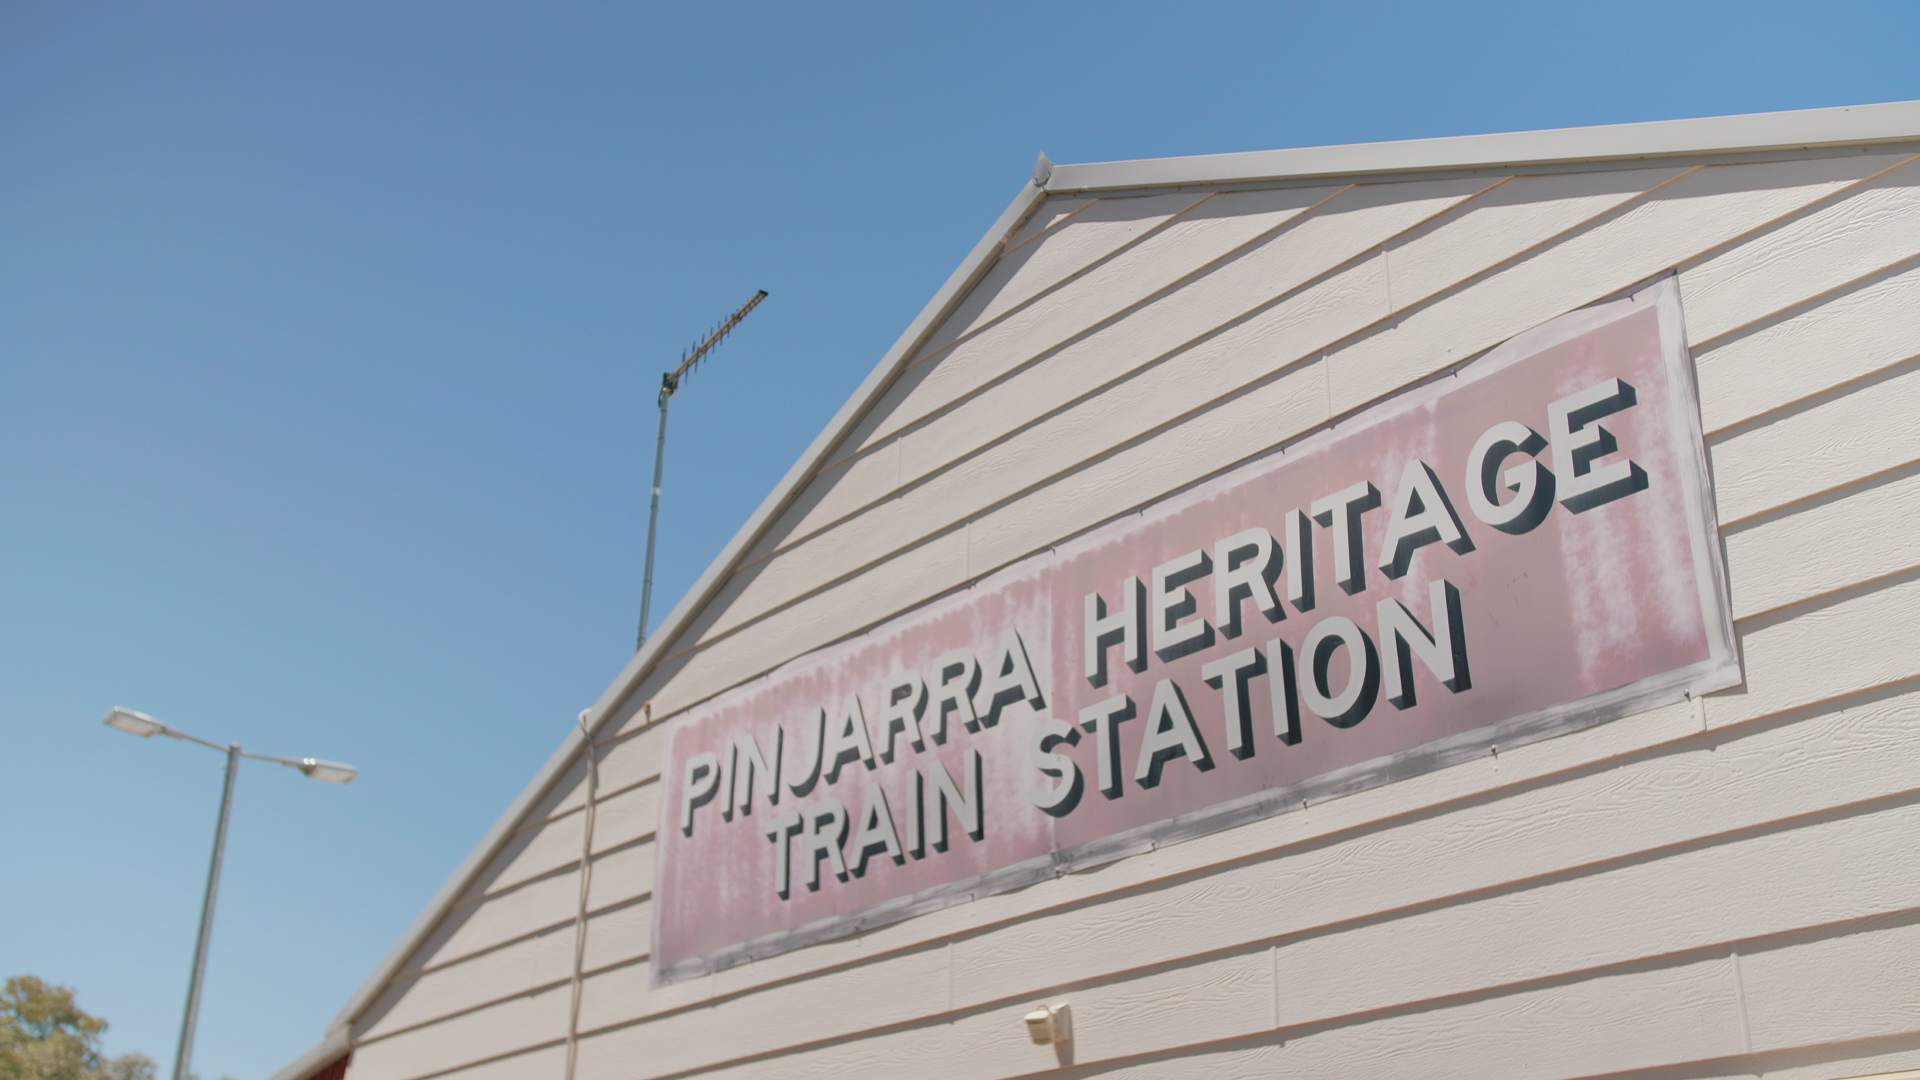 Vision for Pinjarra Heritage Railway Precinct revealed